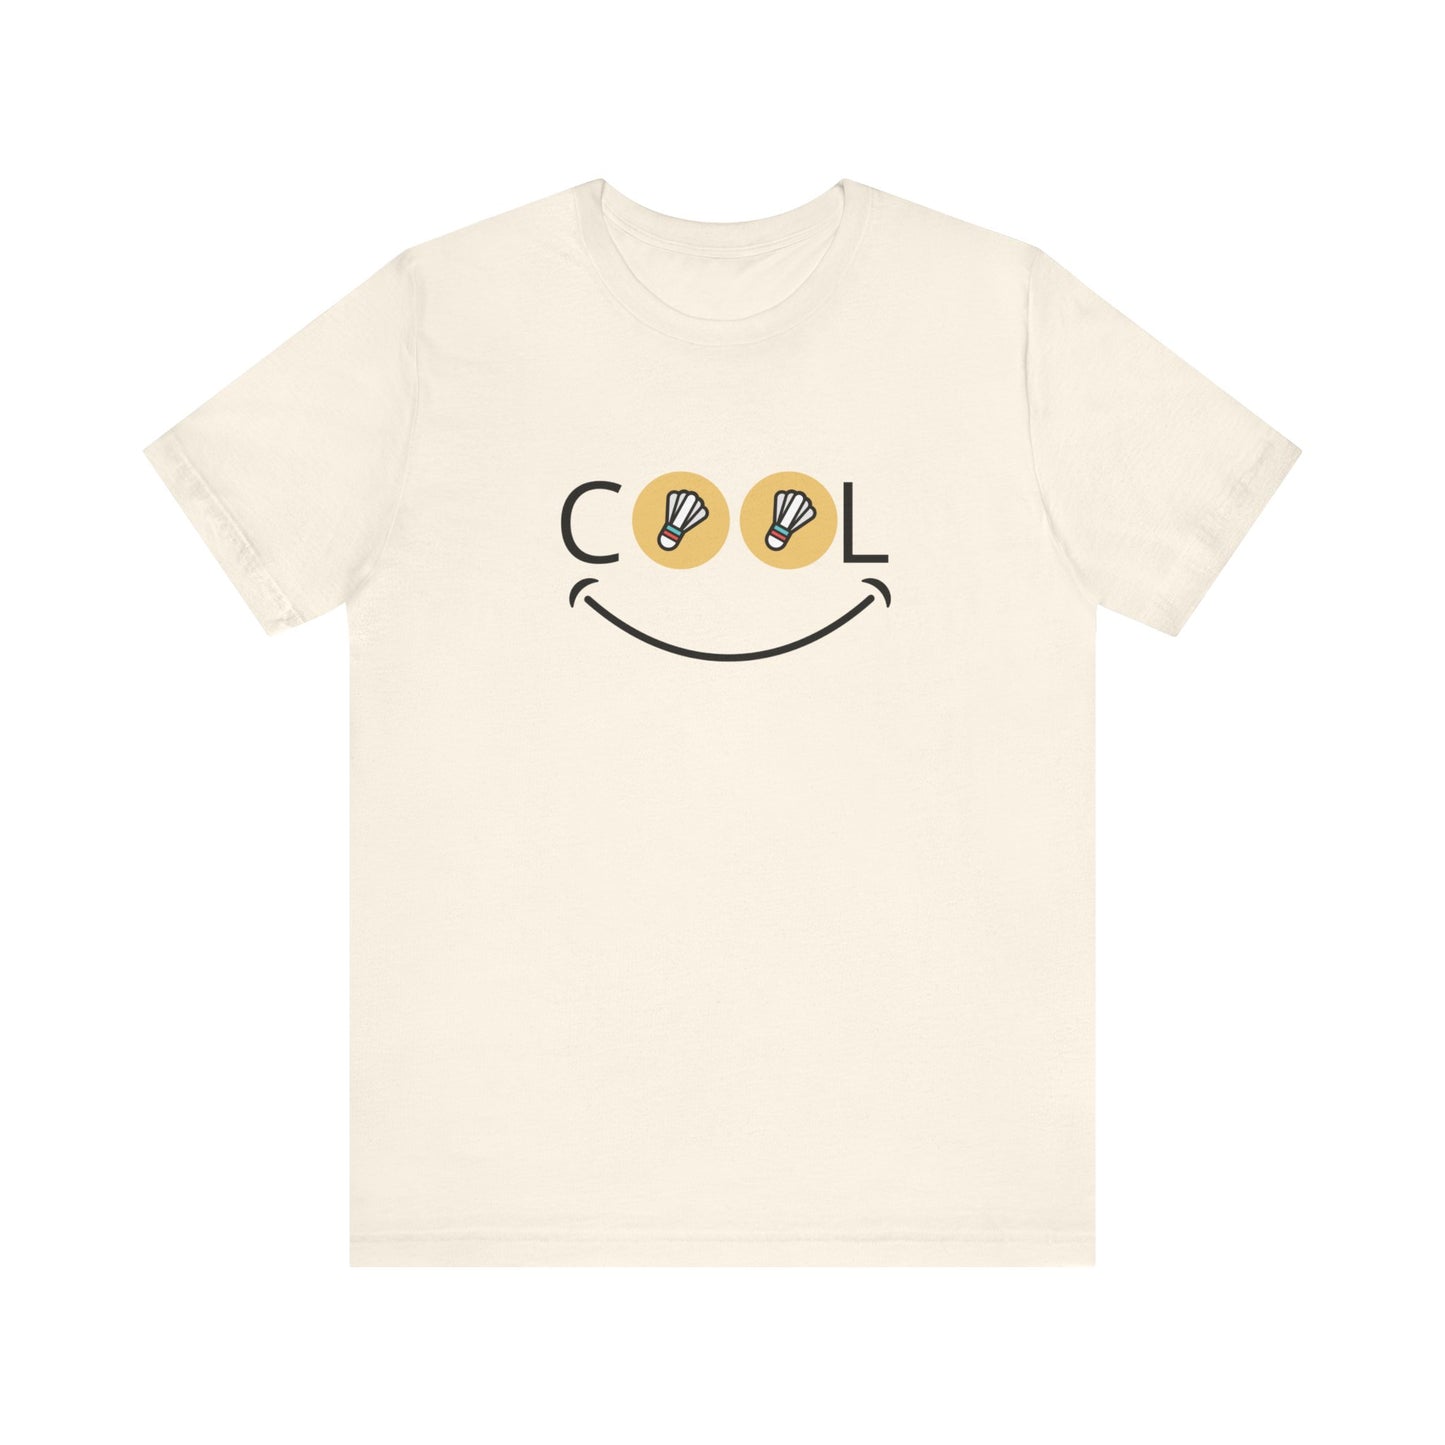 Badminton "Cool" Smiley Face T-shirt